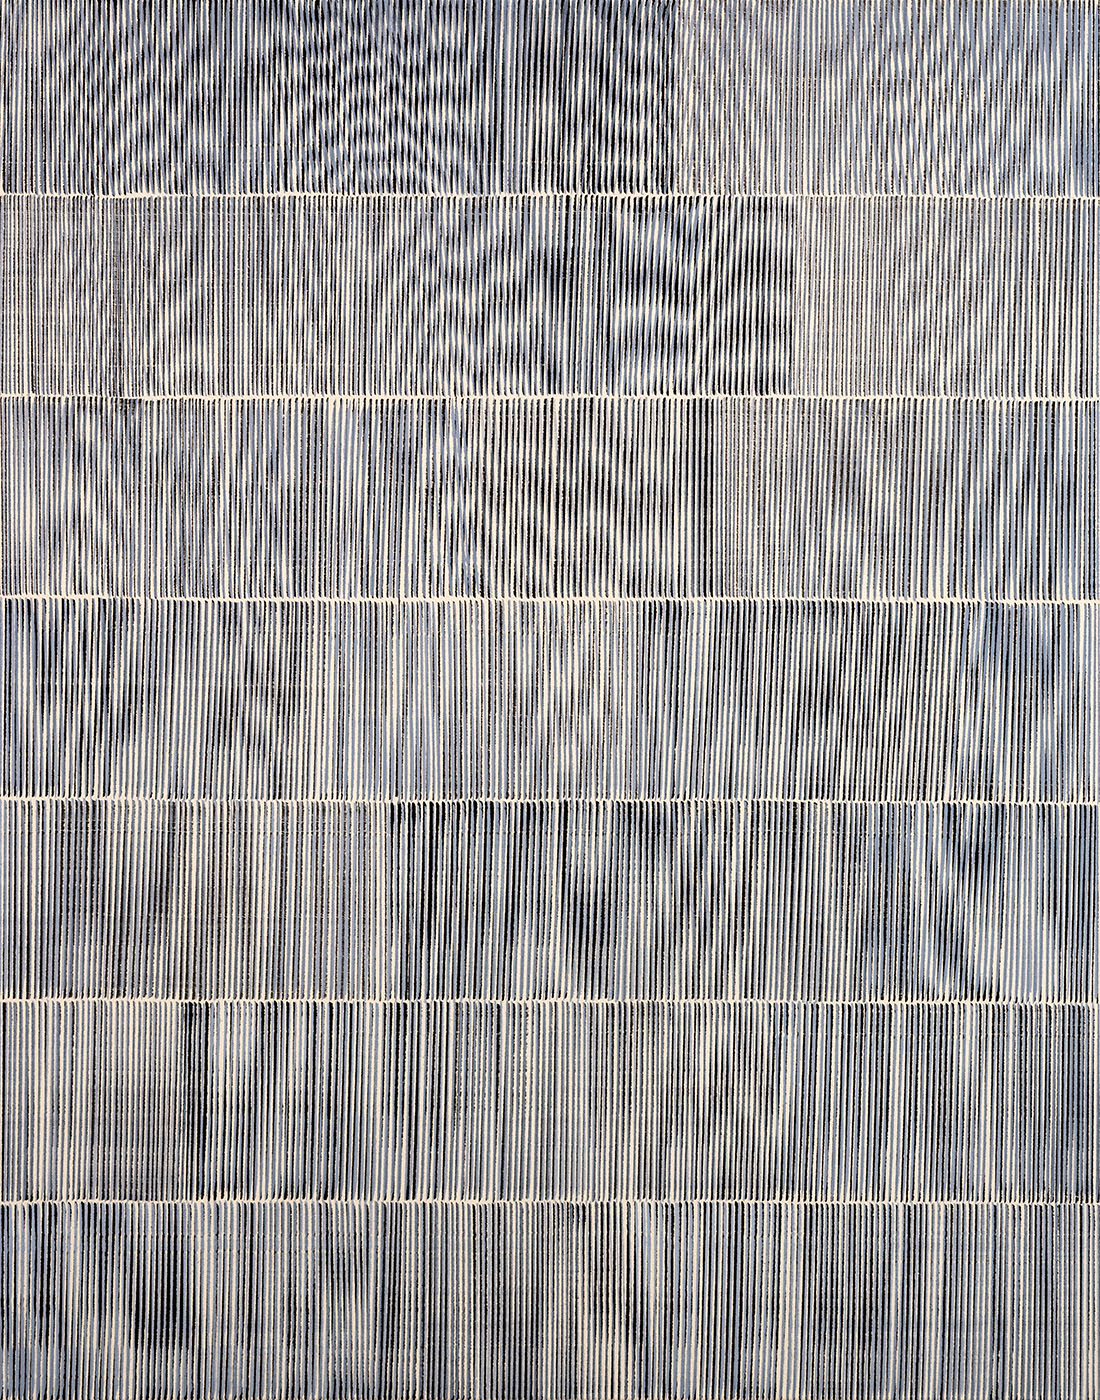 Nikola Dimitrov, Präludium III, 2021, Pigmente, Bindemittel auf Leinwand, 140 × 110 cm